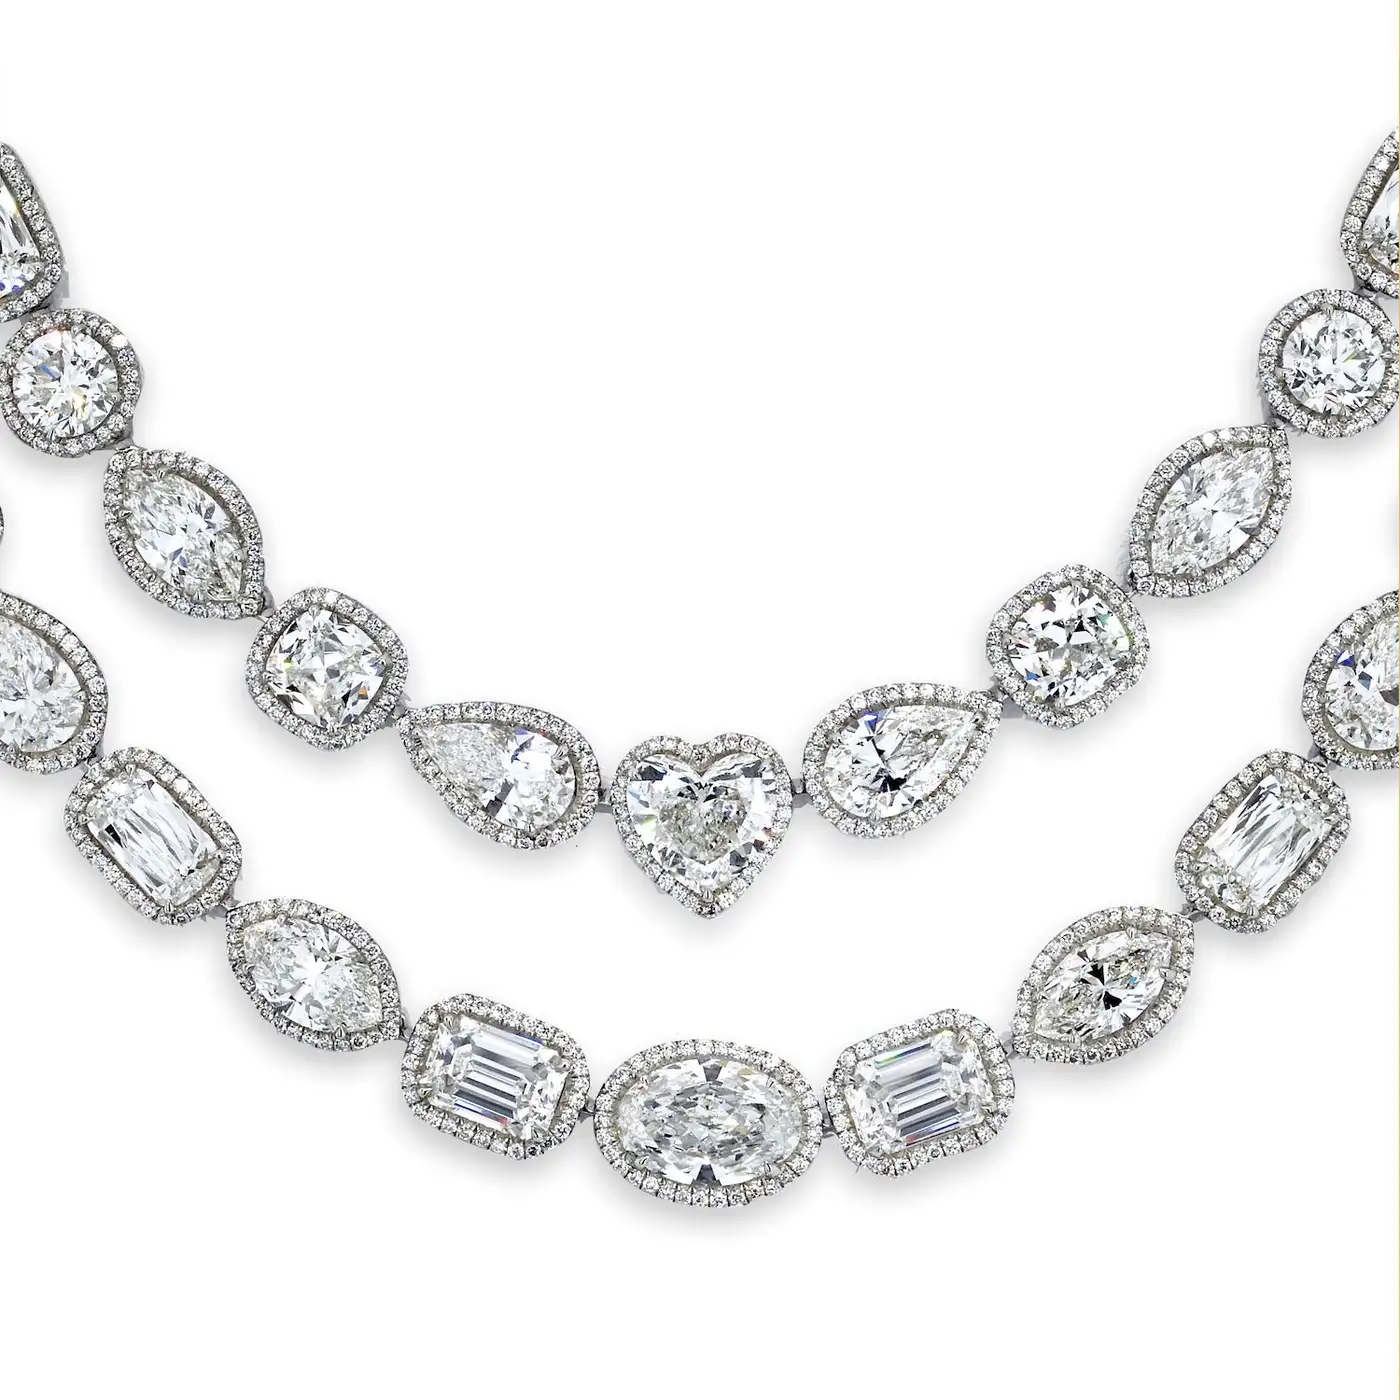 William-Goldberg-63-Carat-Spectacular-Diamond-Infinity-Necklace-2.webp